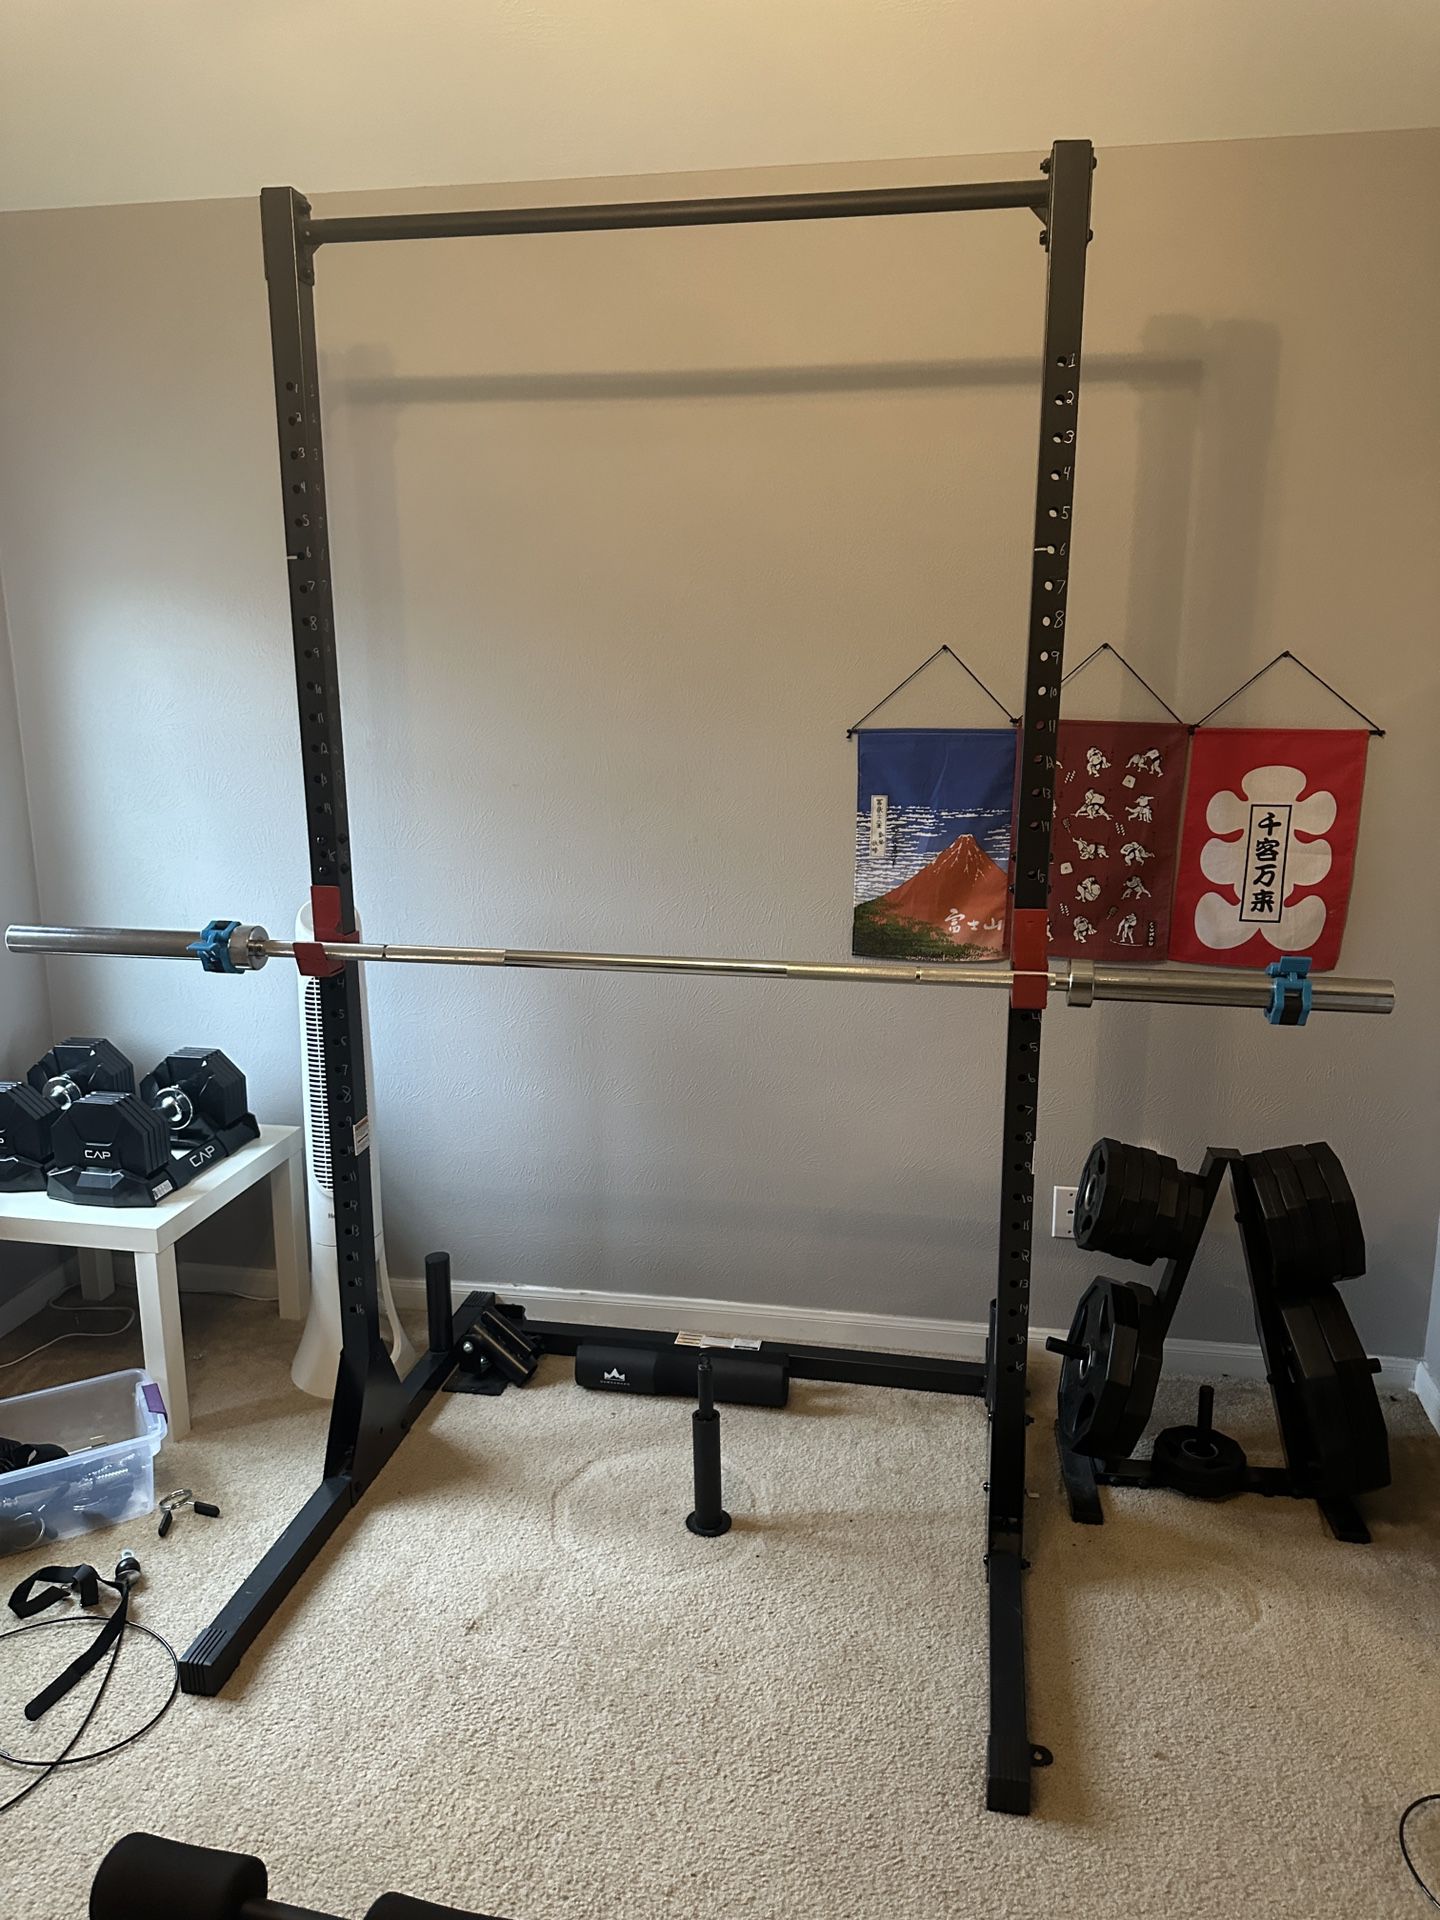 Full Home Gym - Squat Rack, Bench, Barbell Etc 